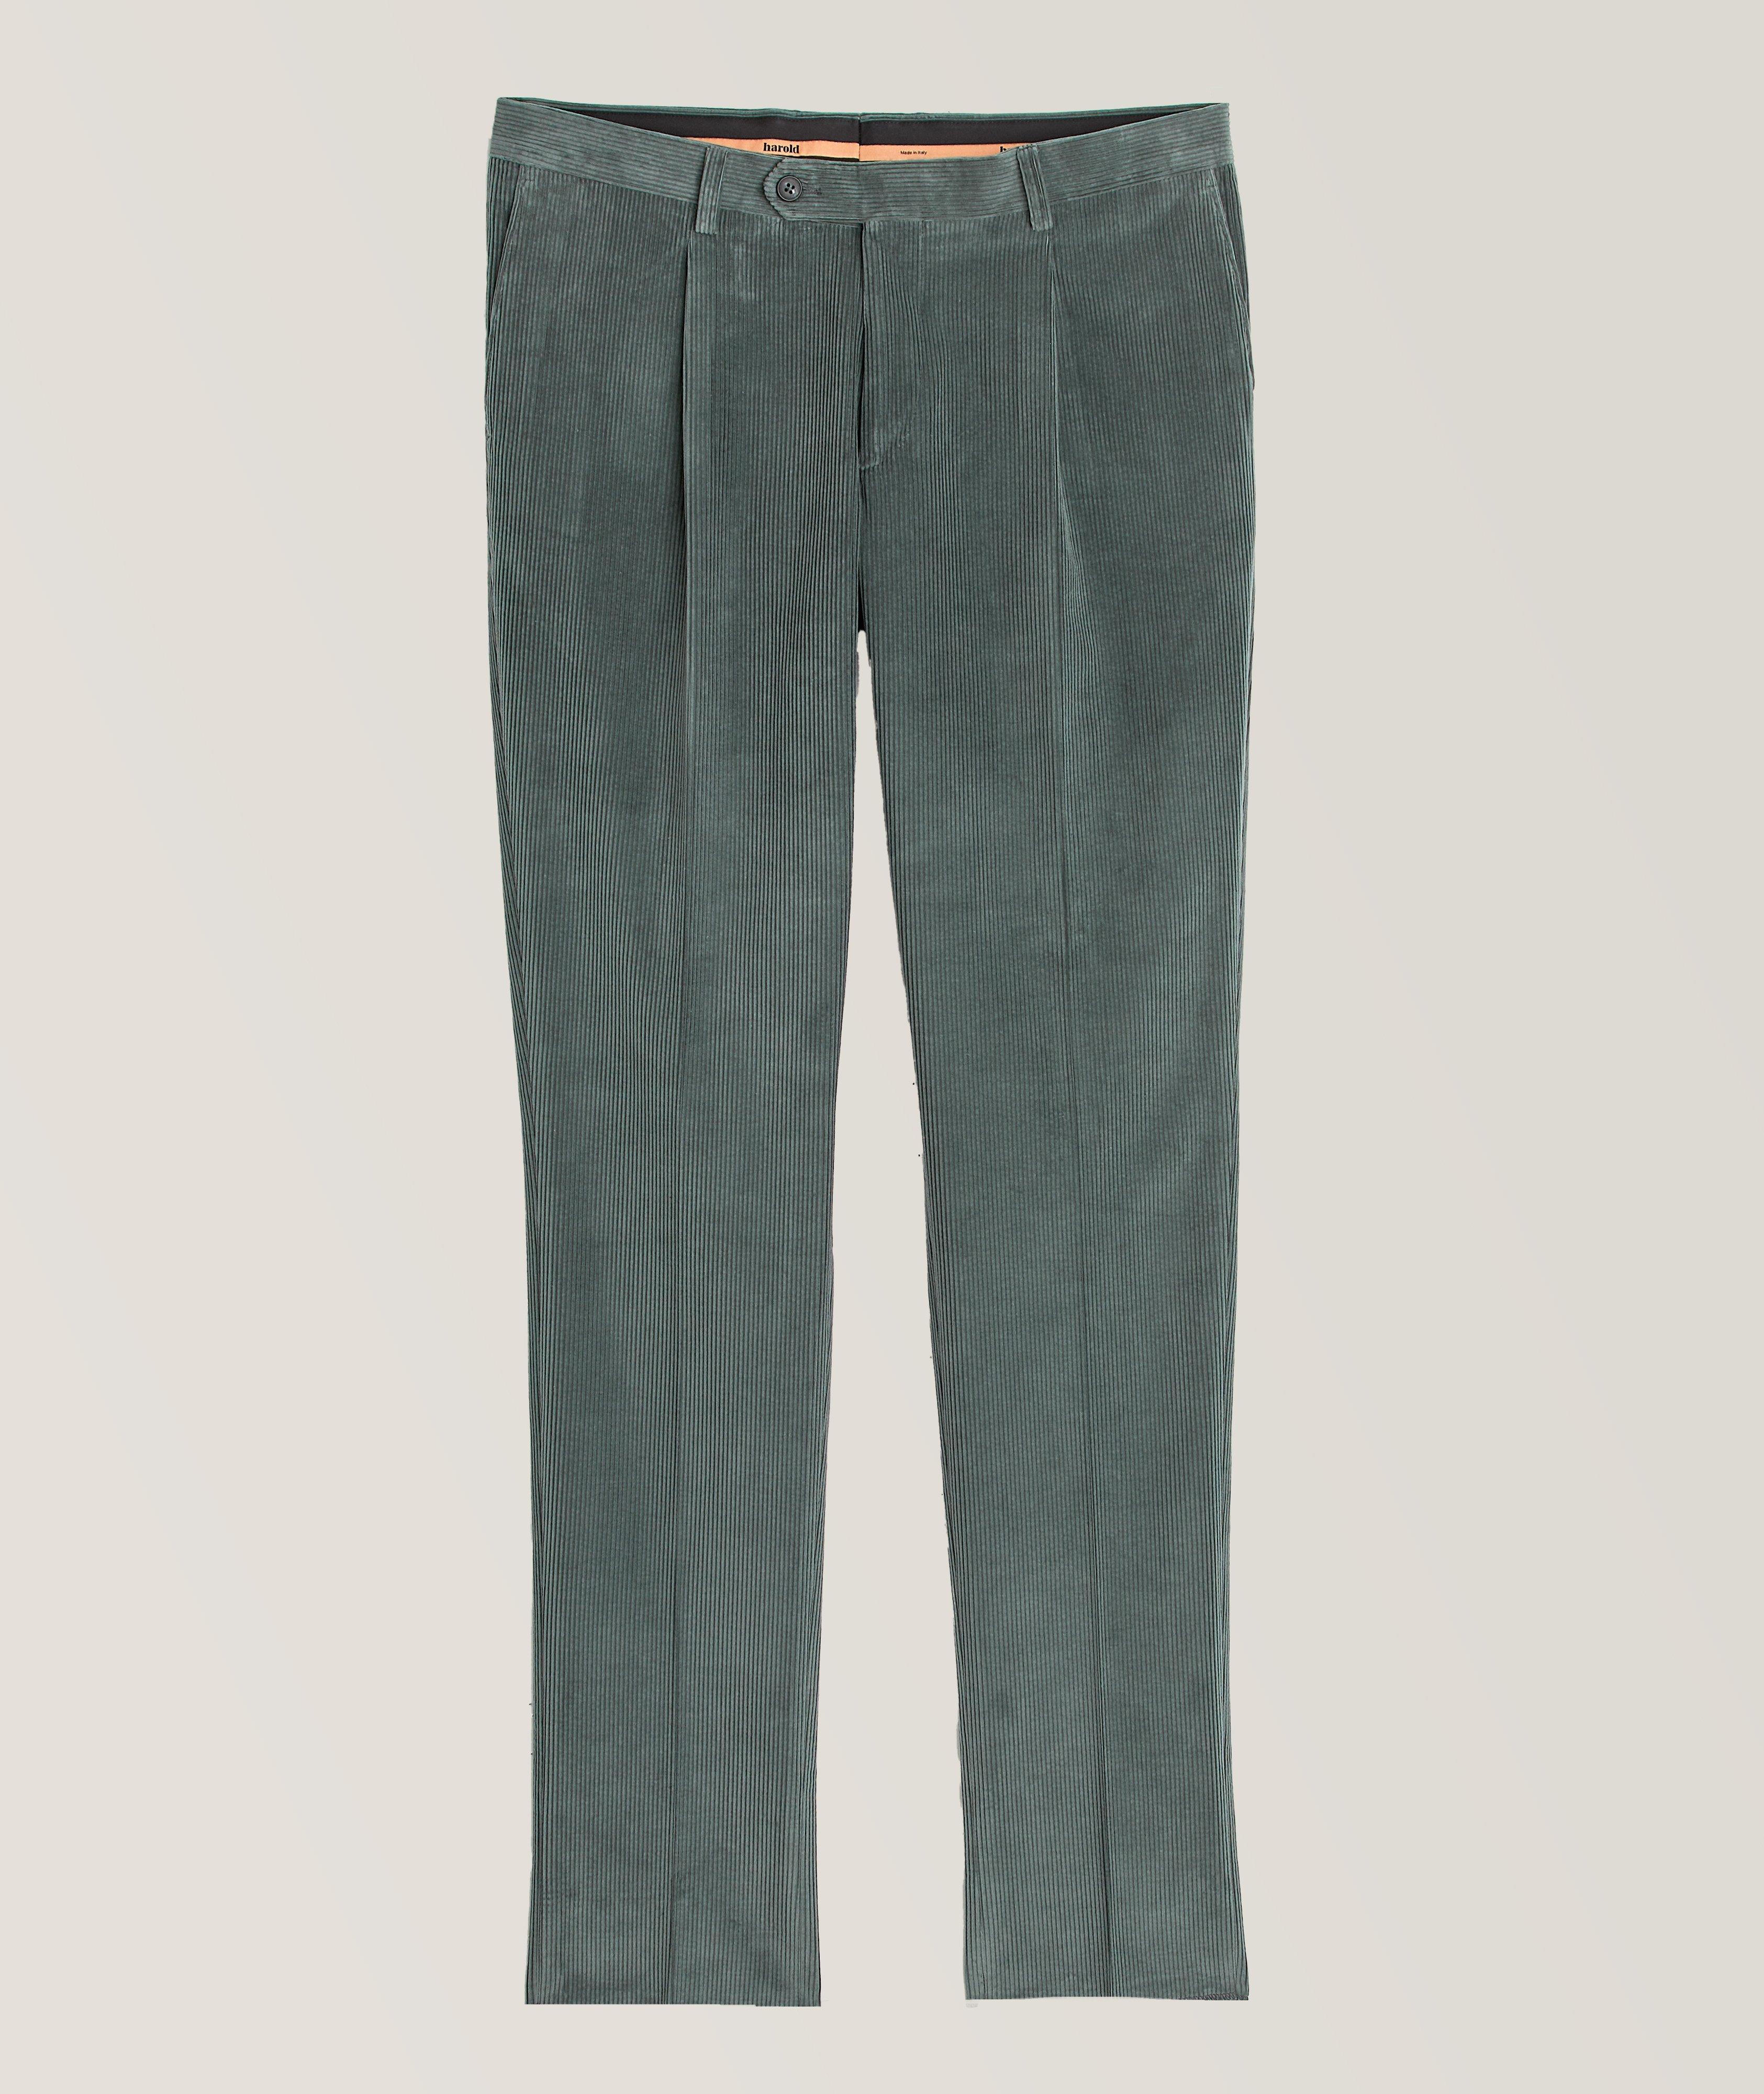 Corduroy Drago Mill Cotton-Virgin Wool Pants  image 0